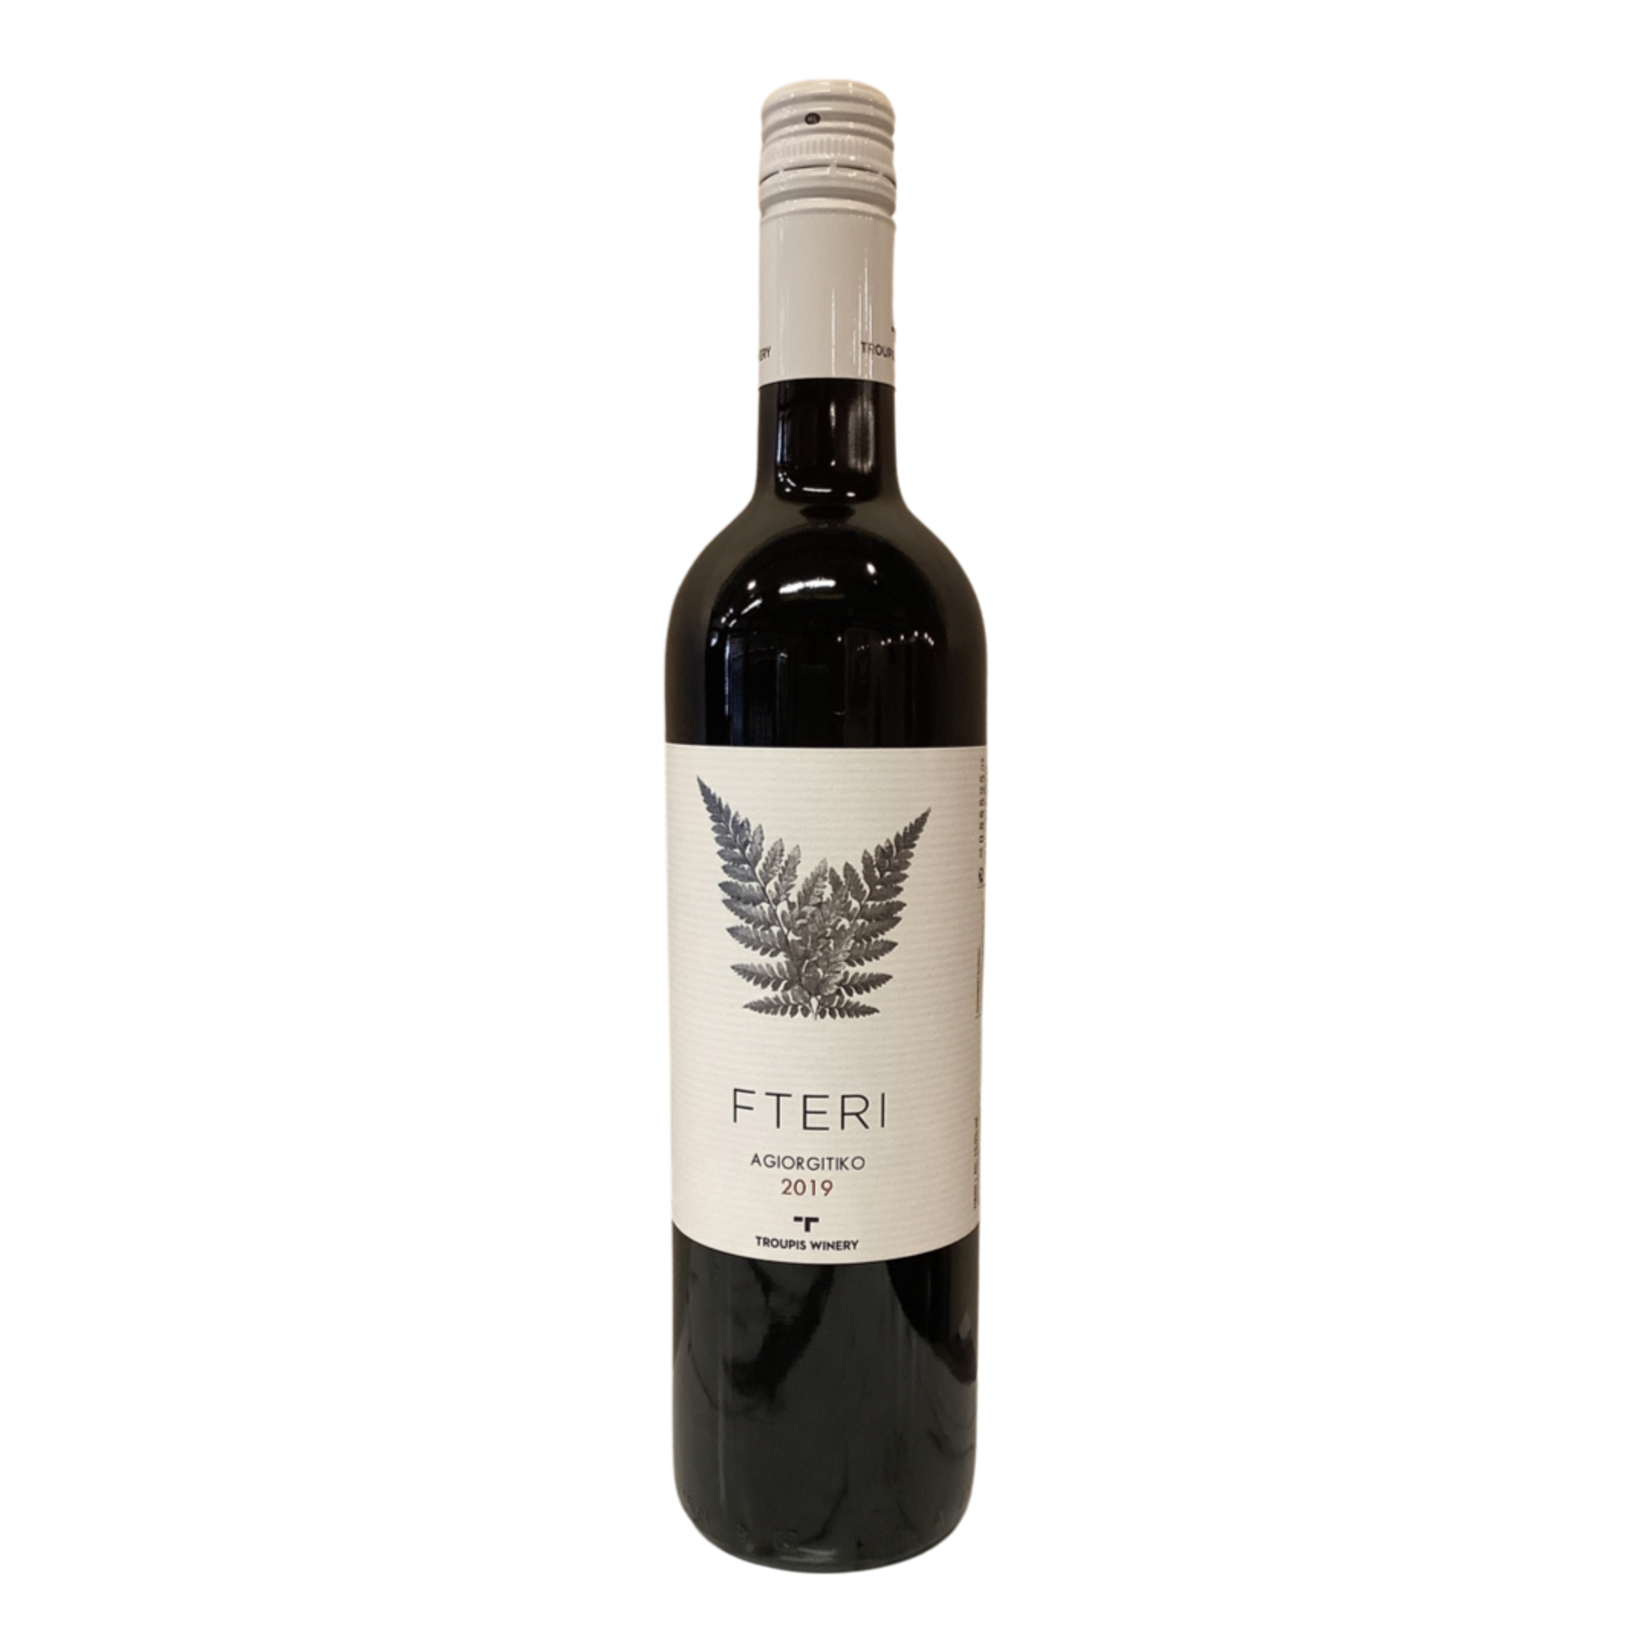 2019 Troupis Winery "Fteri" Agiorgitiko, Peloponnese | Greece